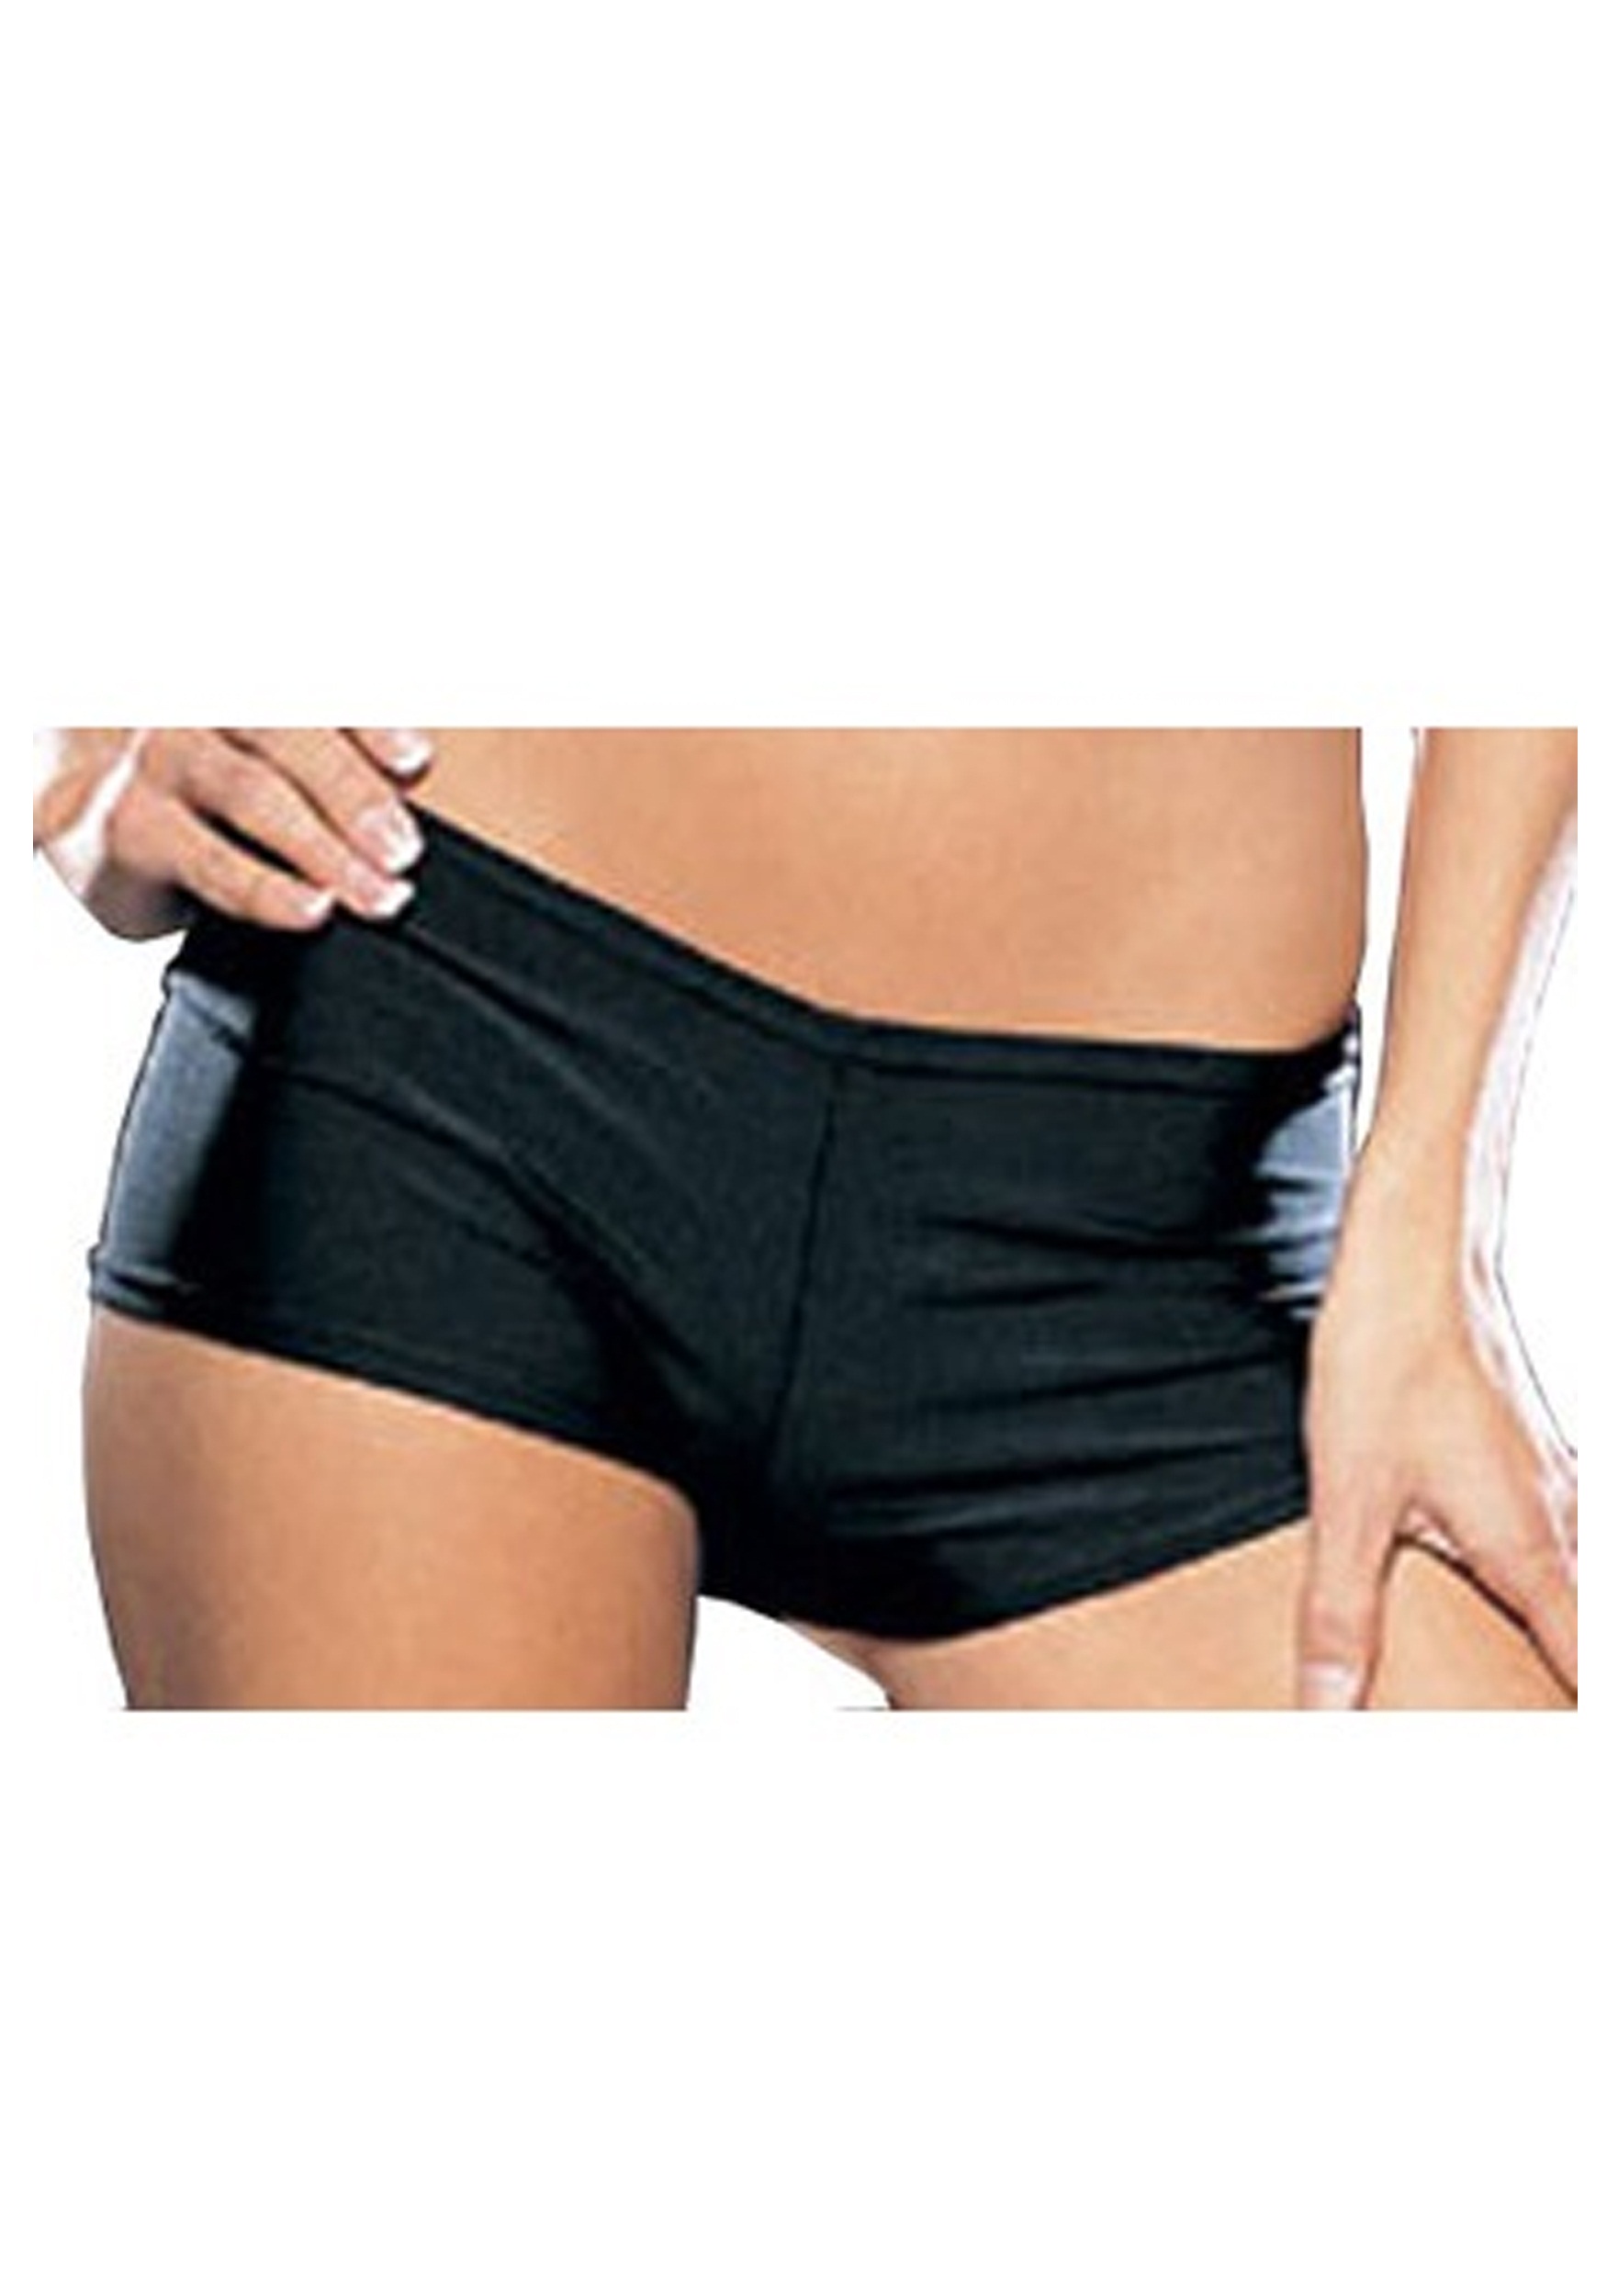 Kikx Hot Pants with Elastic Waist in Plain Black Matt Lycra 